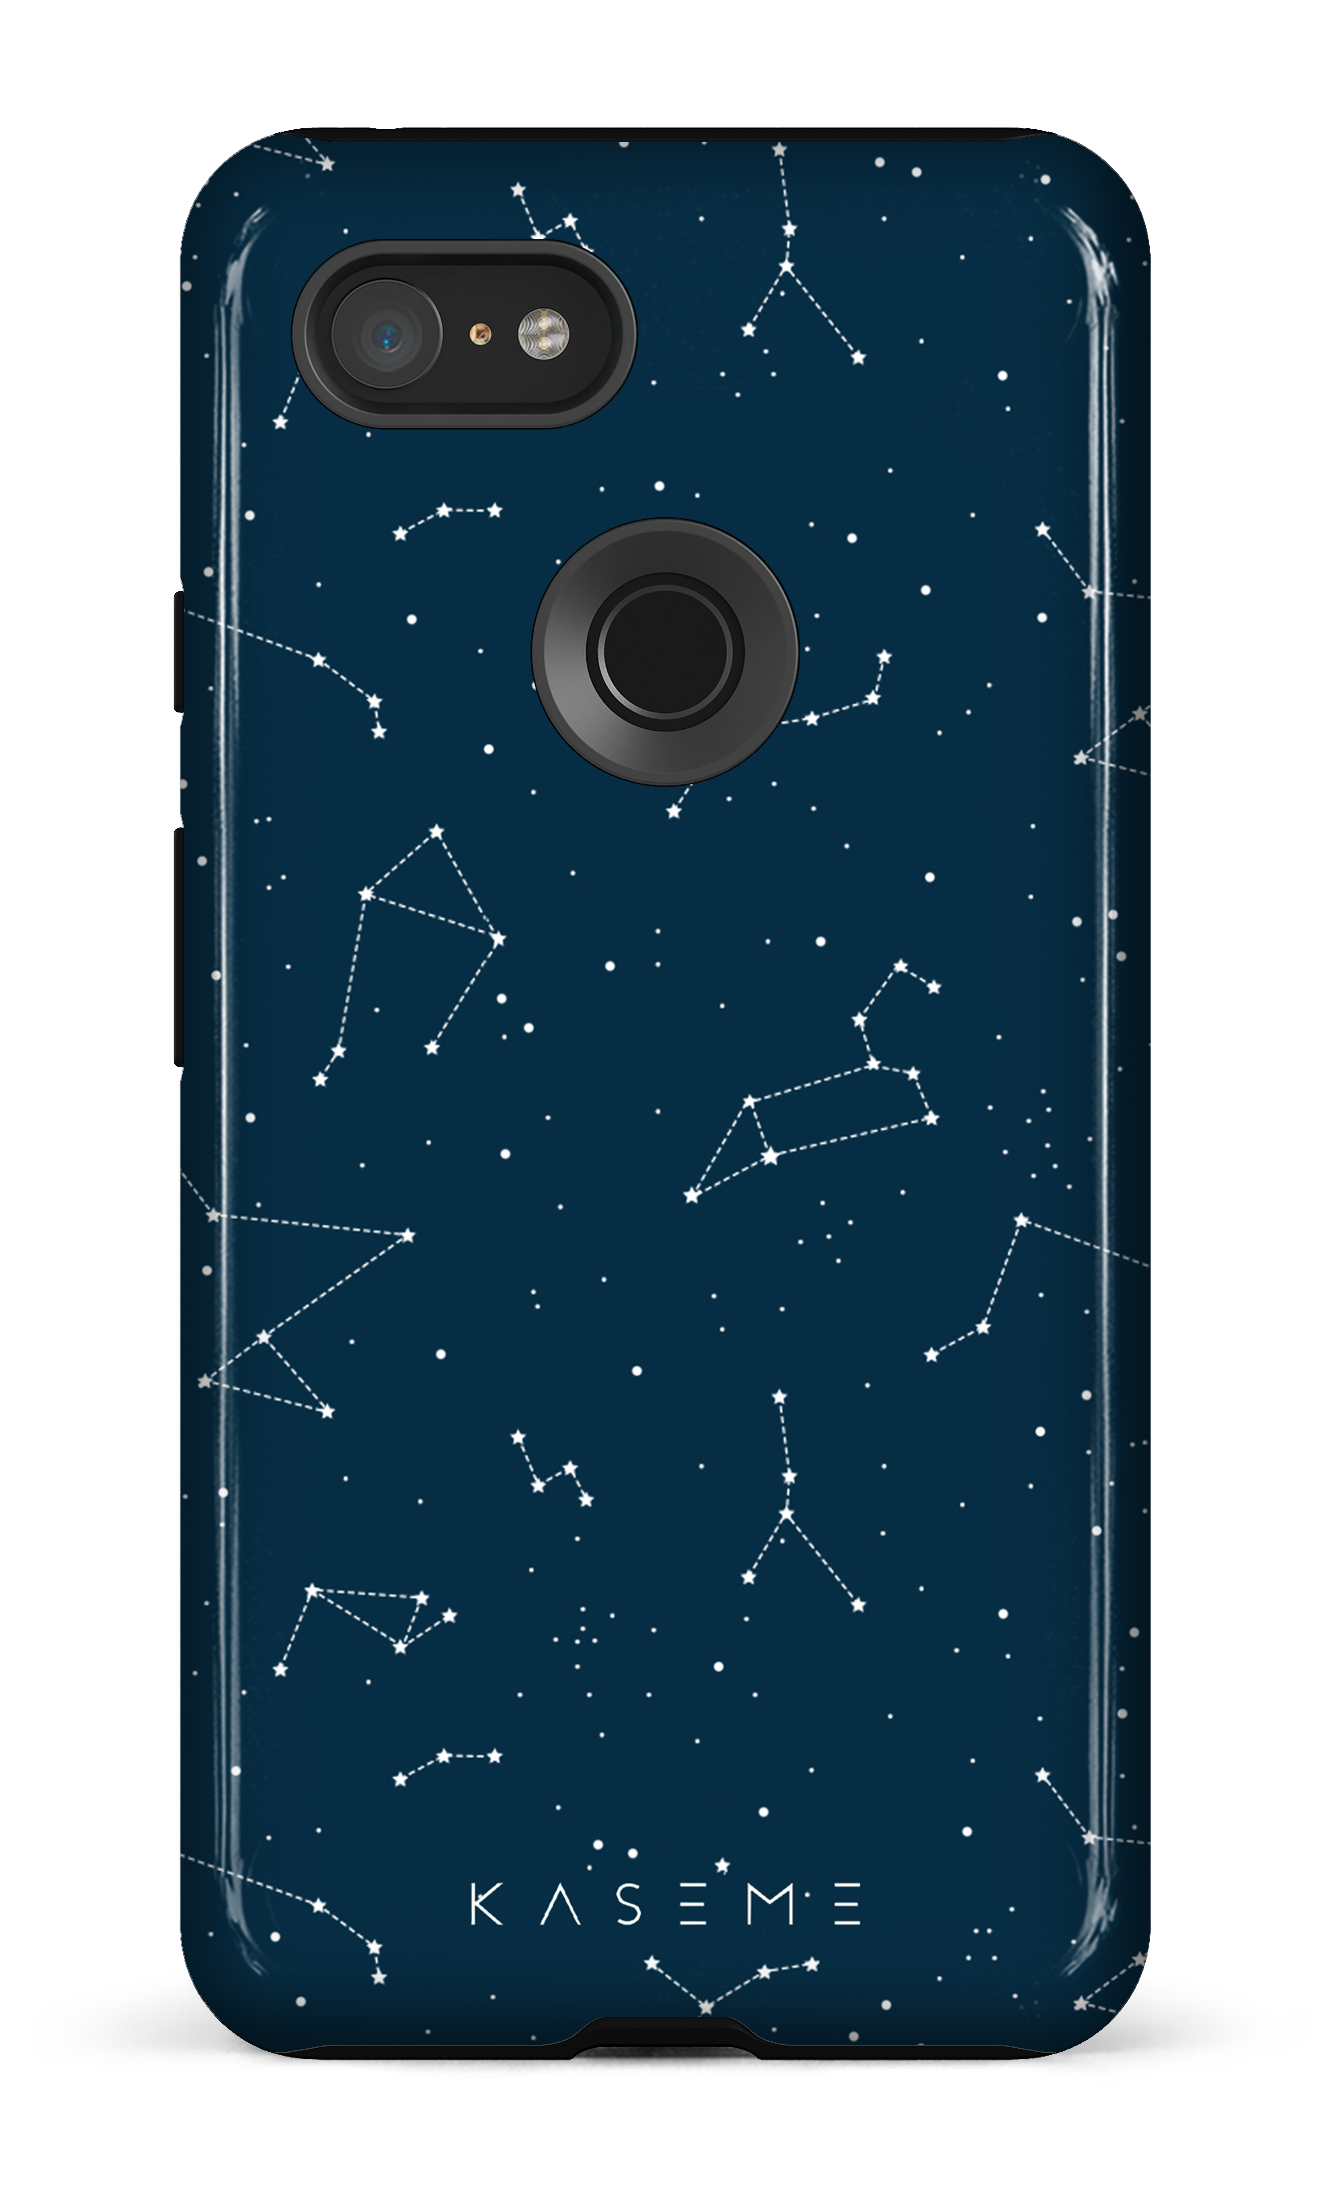 Cosmos - Google Pixel 3 XL